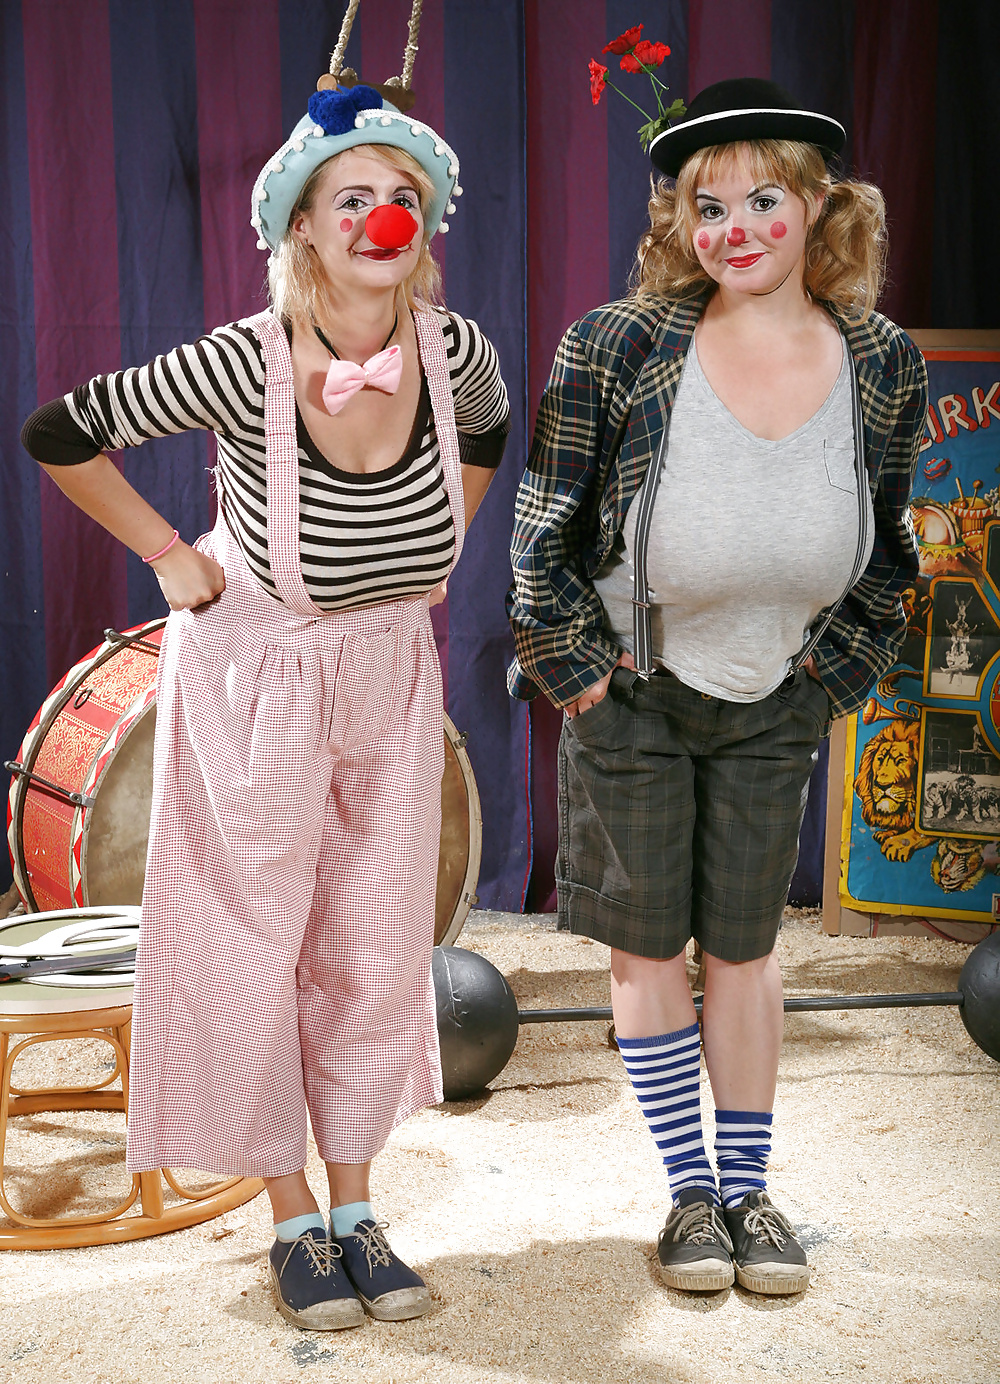 Vendy Mia - Two busty clowns - 58 photos